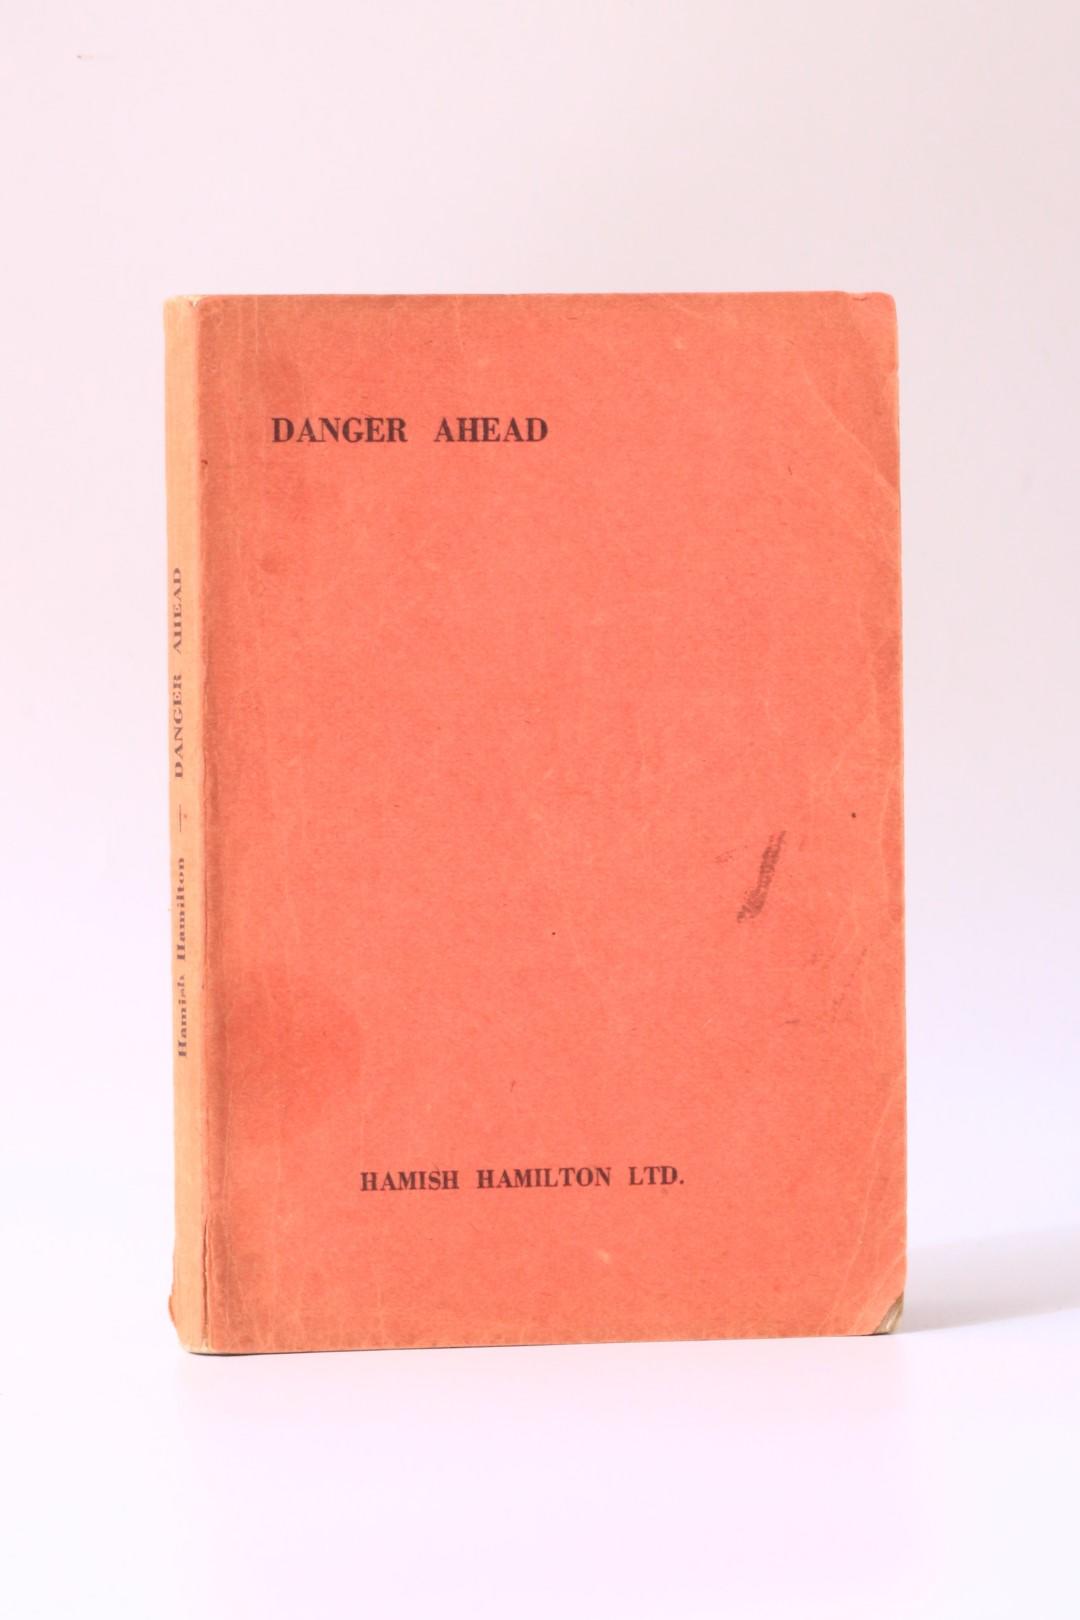 Georges Simenon - Danger Ahead - Hamish Hamilton, 1955, Proof.